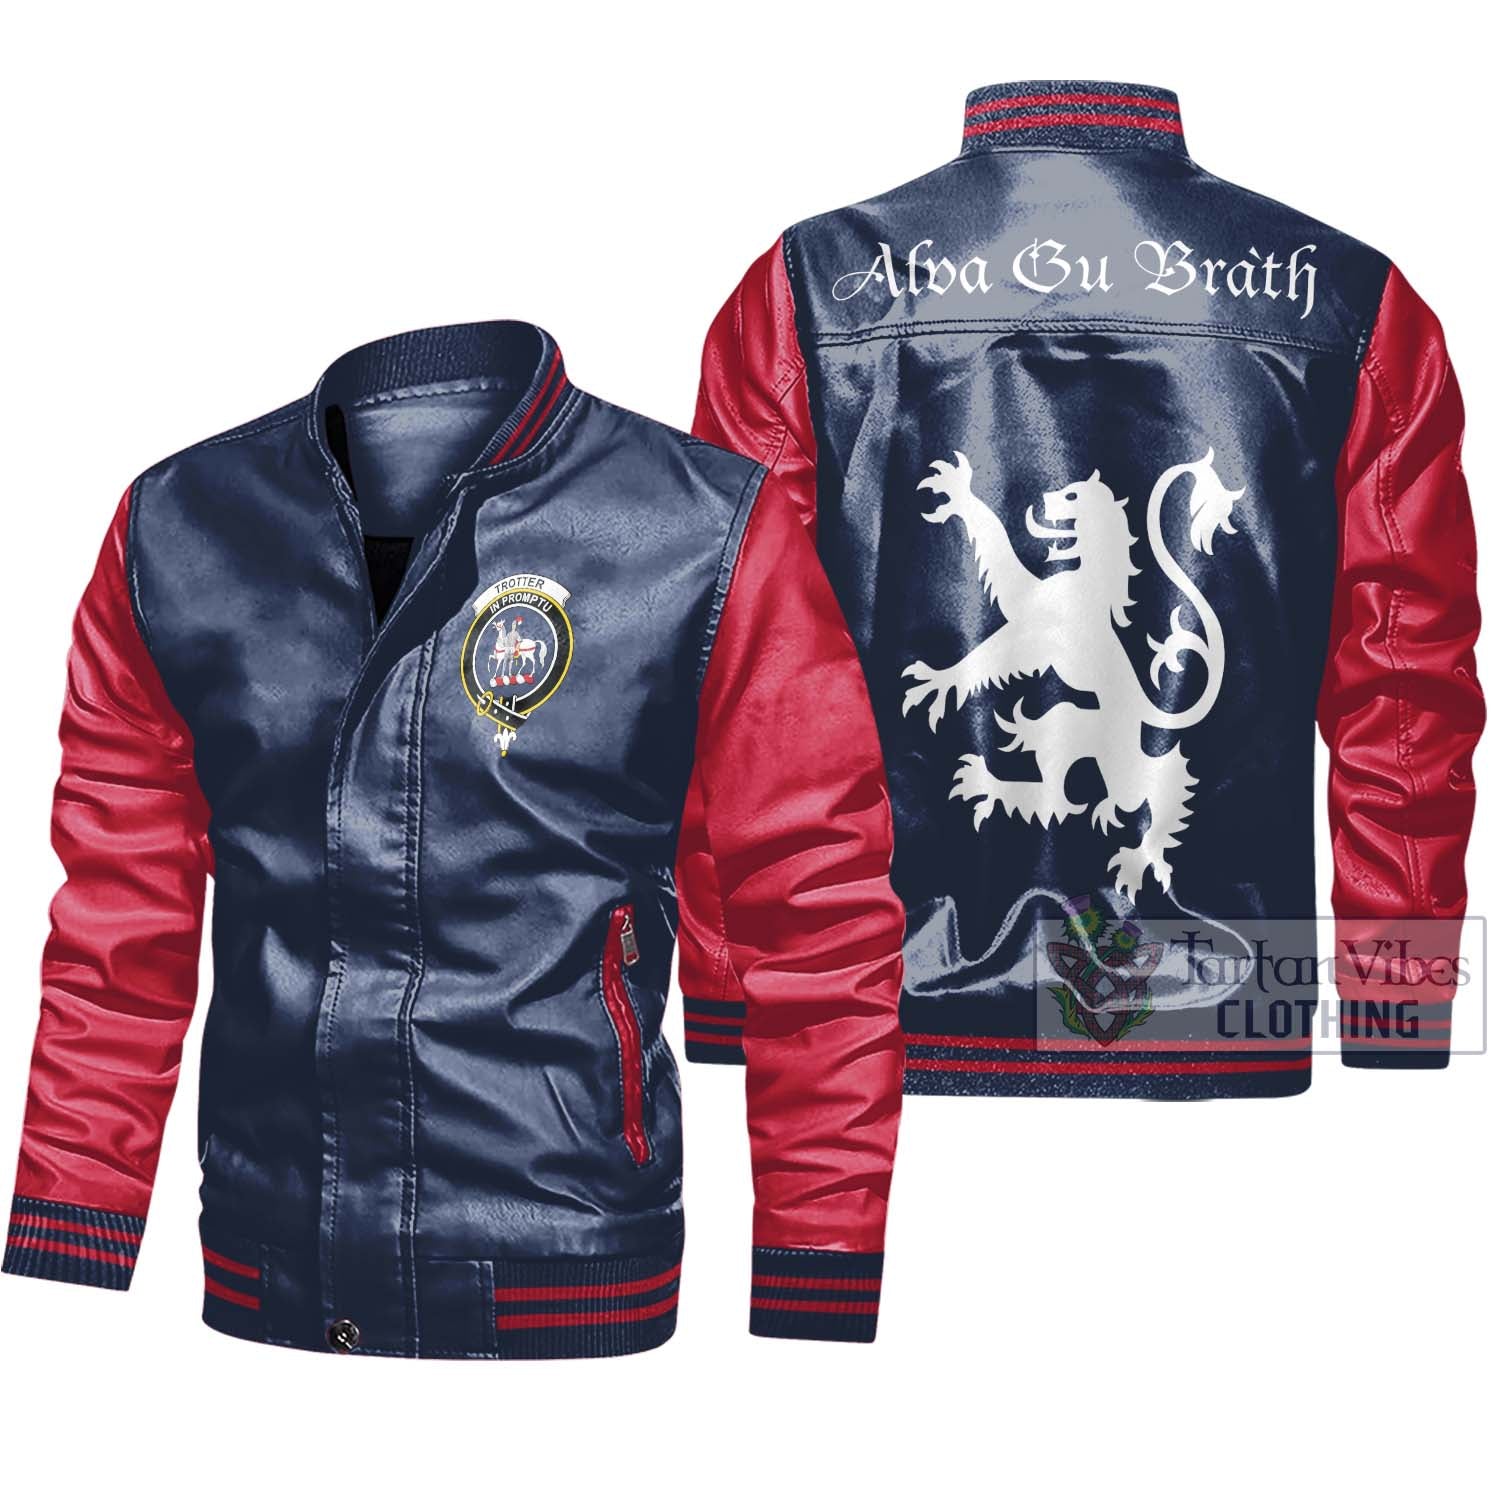 Tartan Vibes Clothing Trotter Family Crest Leather Bomber Jacket Lion Rampant Alba Gu Brath Style